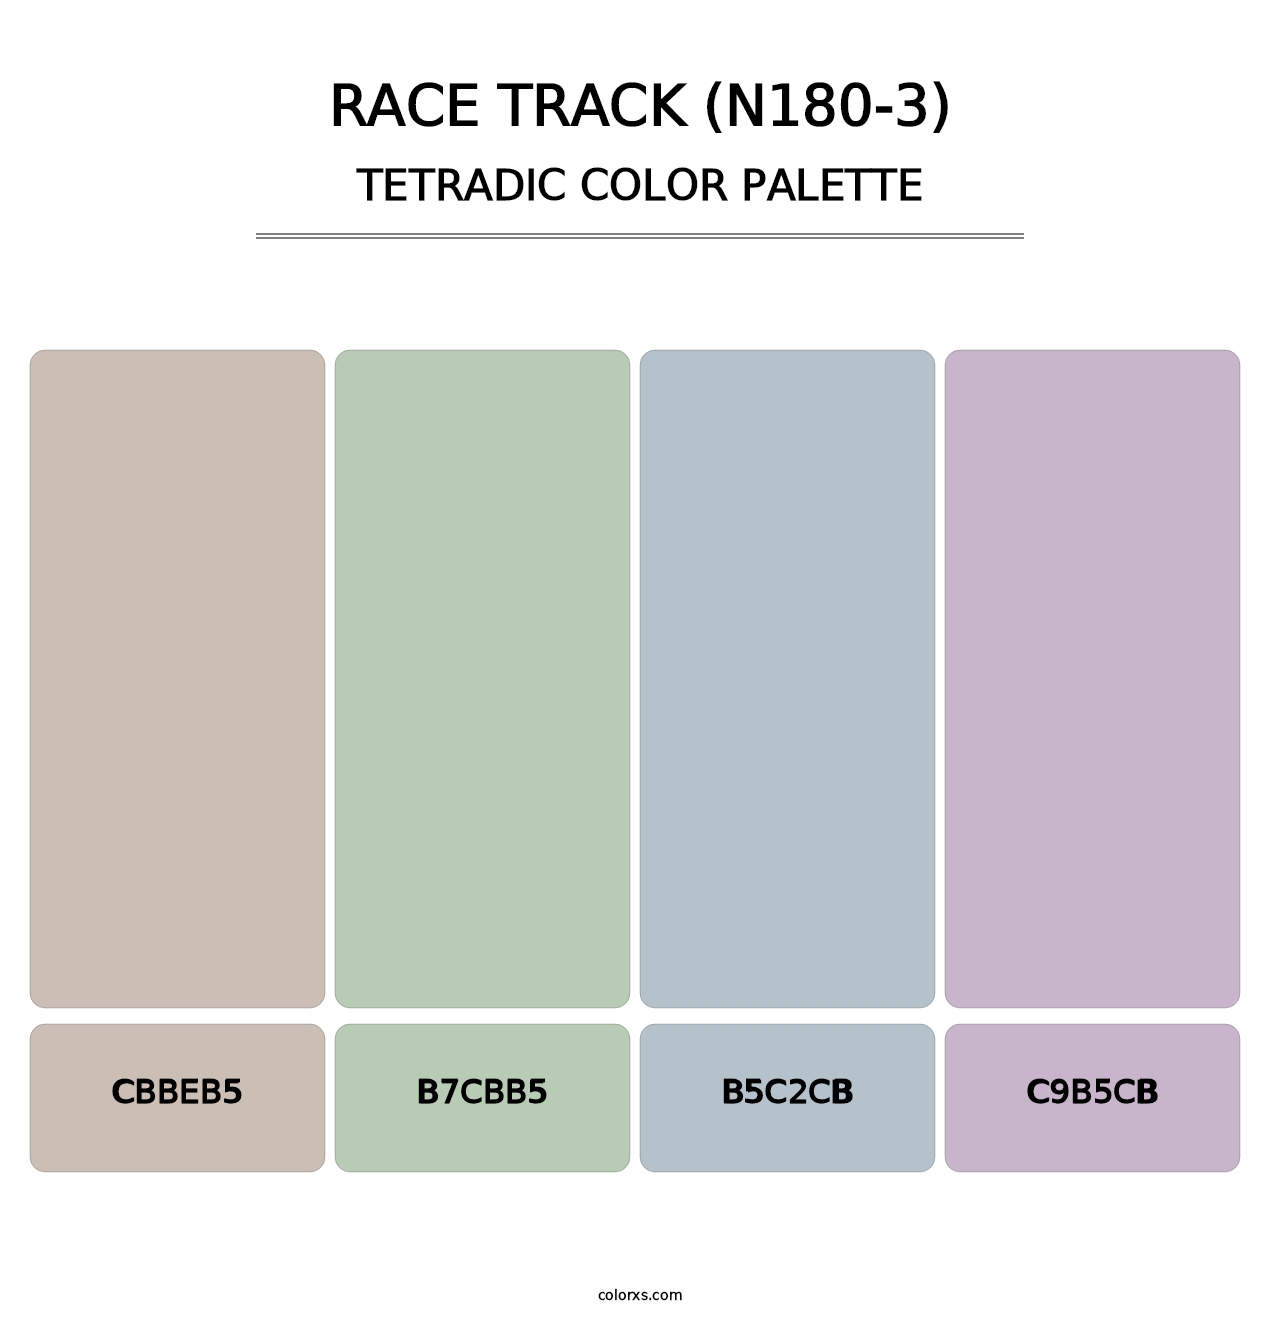 Race Track (N180-3) - Tetradic Color Palette